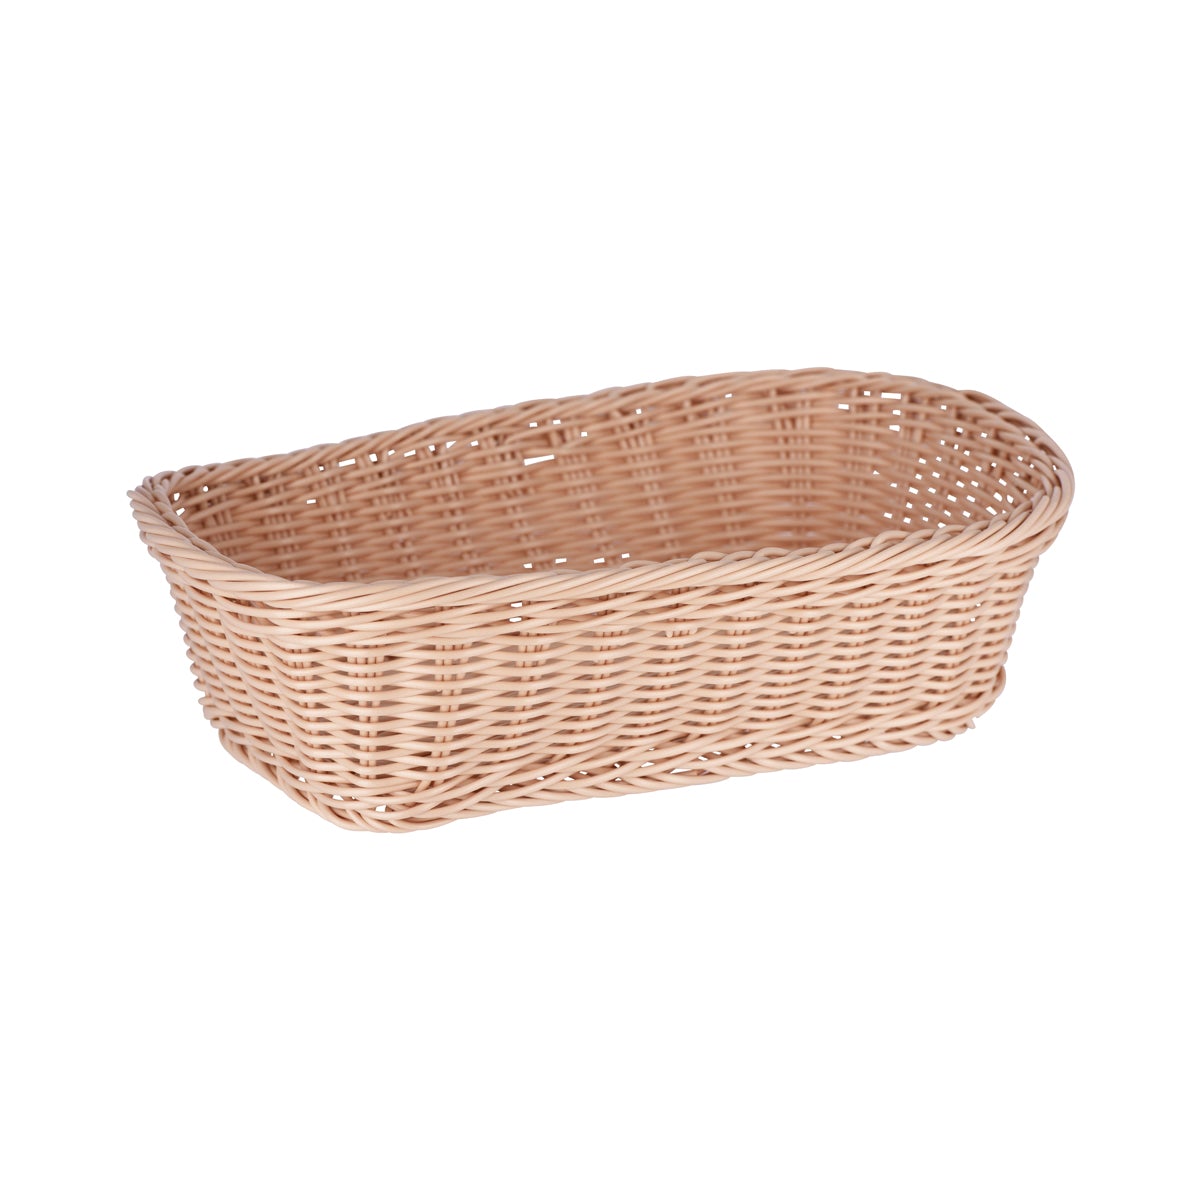 '04076 Chef Inox Bread Basket Rectangular Polypropylene 310x210x90mm Tomkin Australia Hospitality Supplies